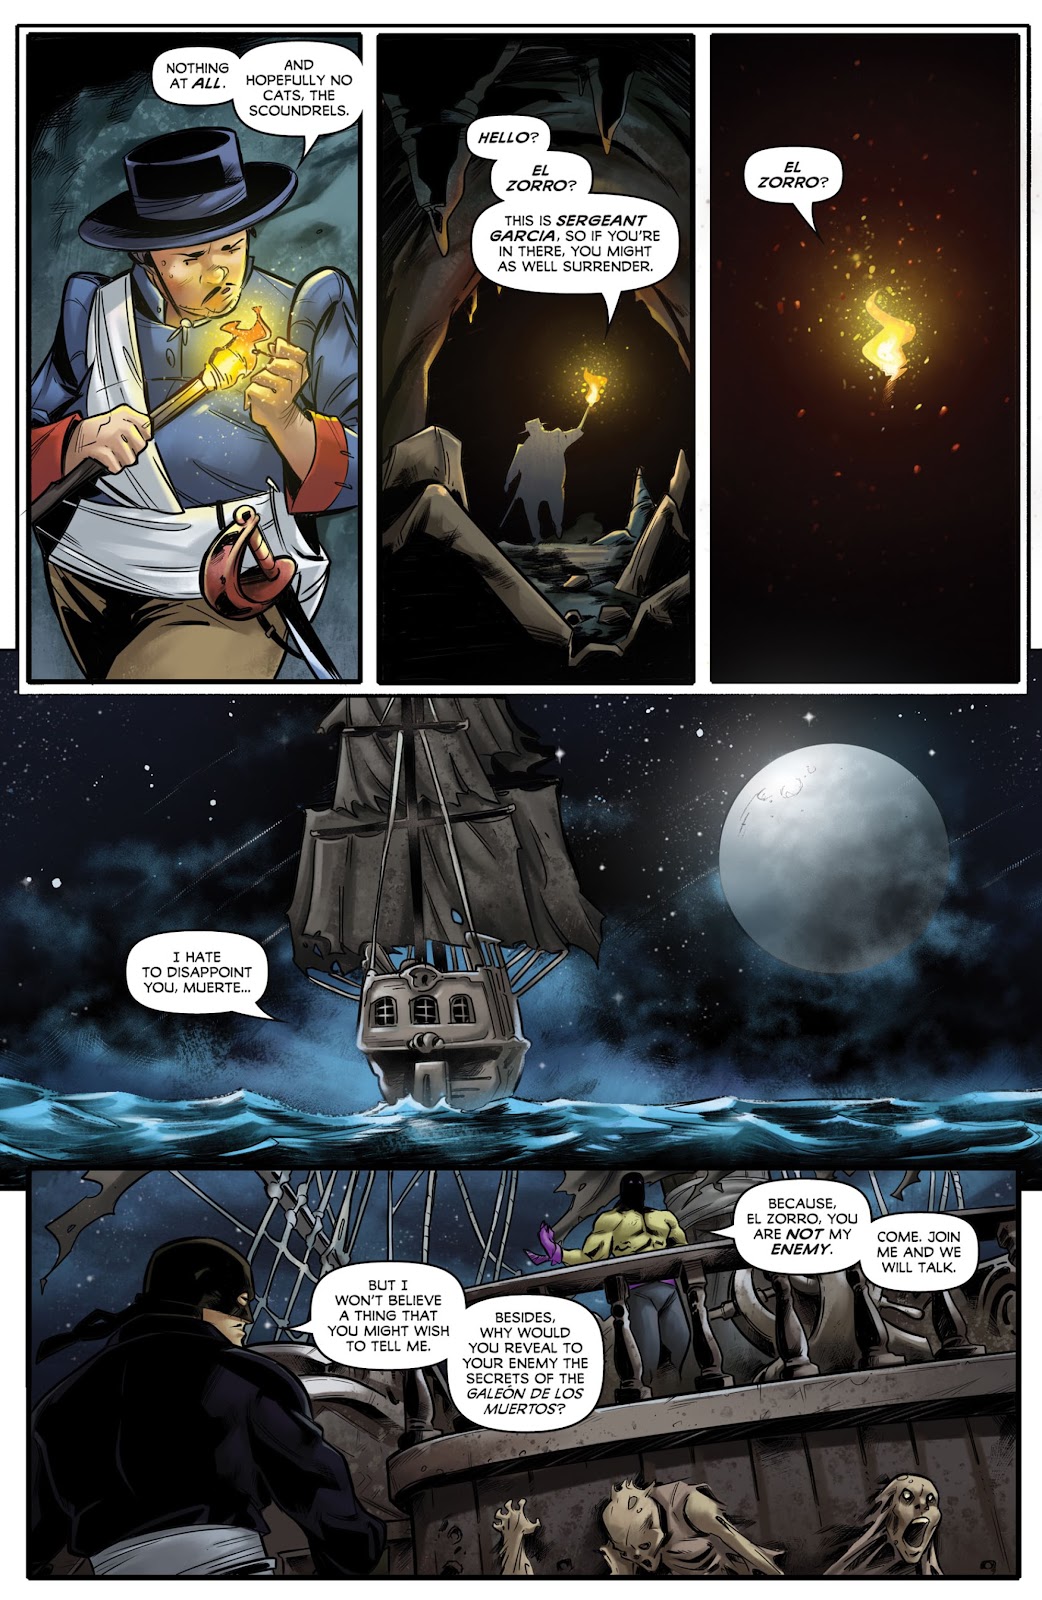 Zorro: Galleon Of the Dead issue 3 - Page 4